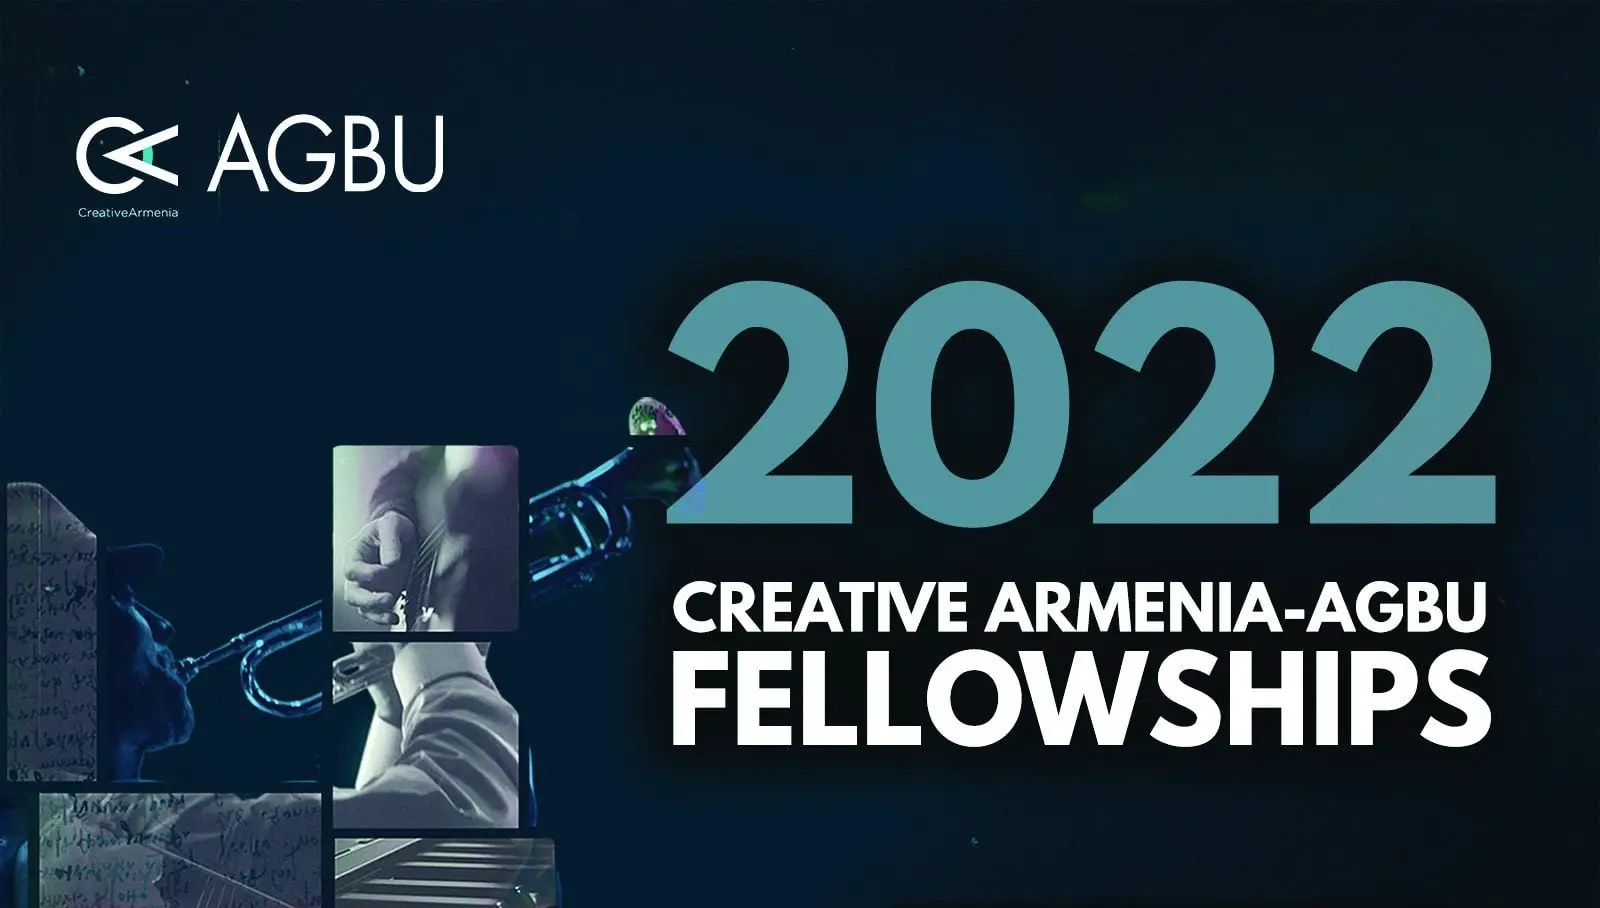 Creative Armenia AGBU Fellowship Programme $ 5000 in funding